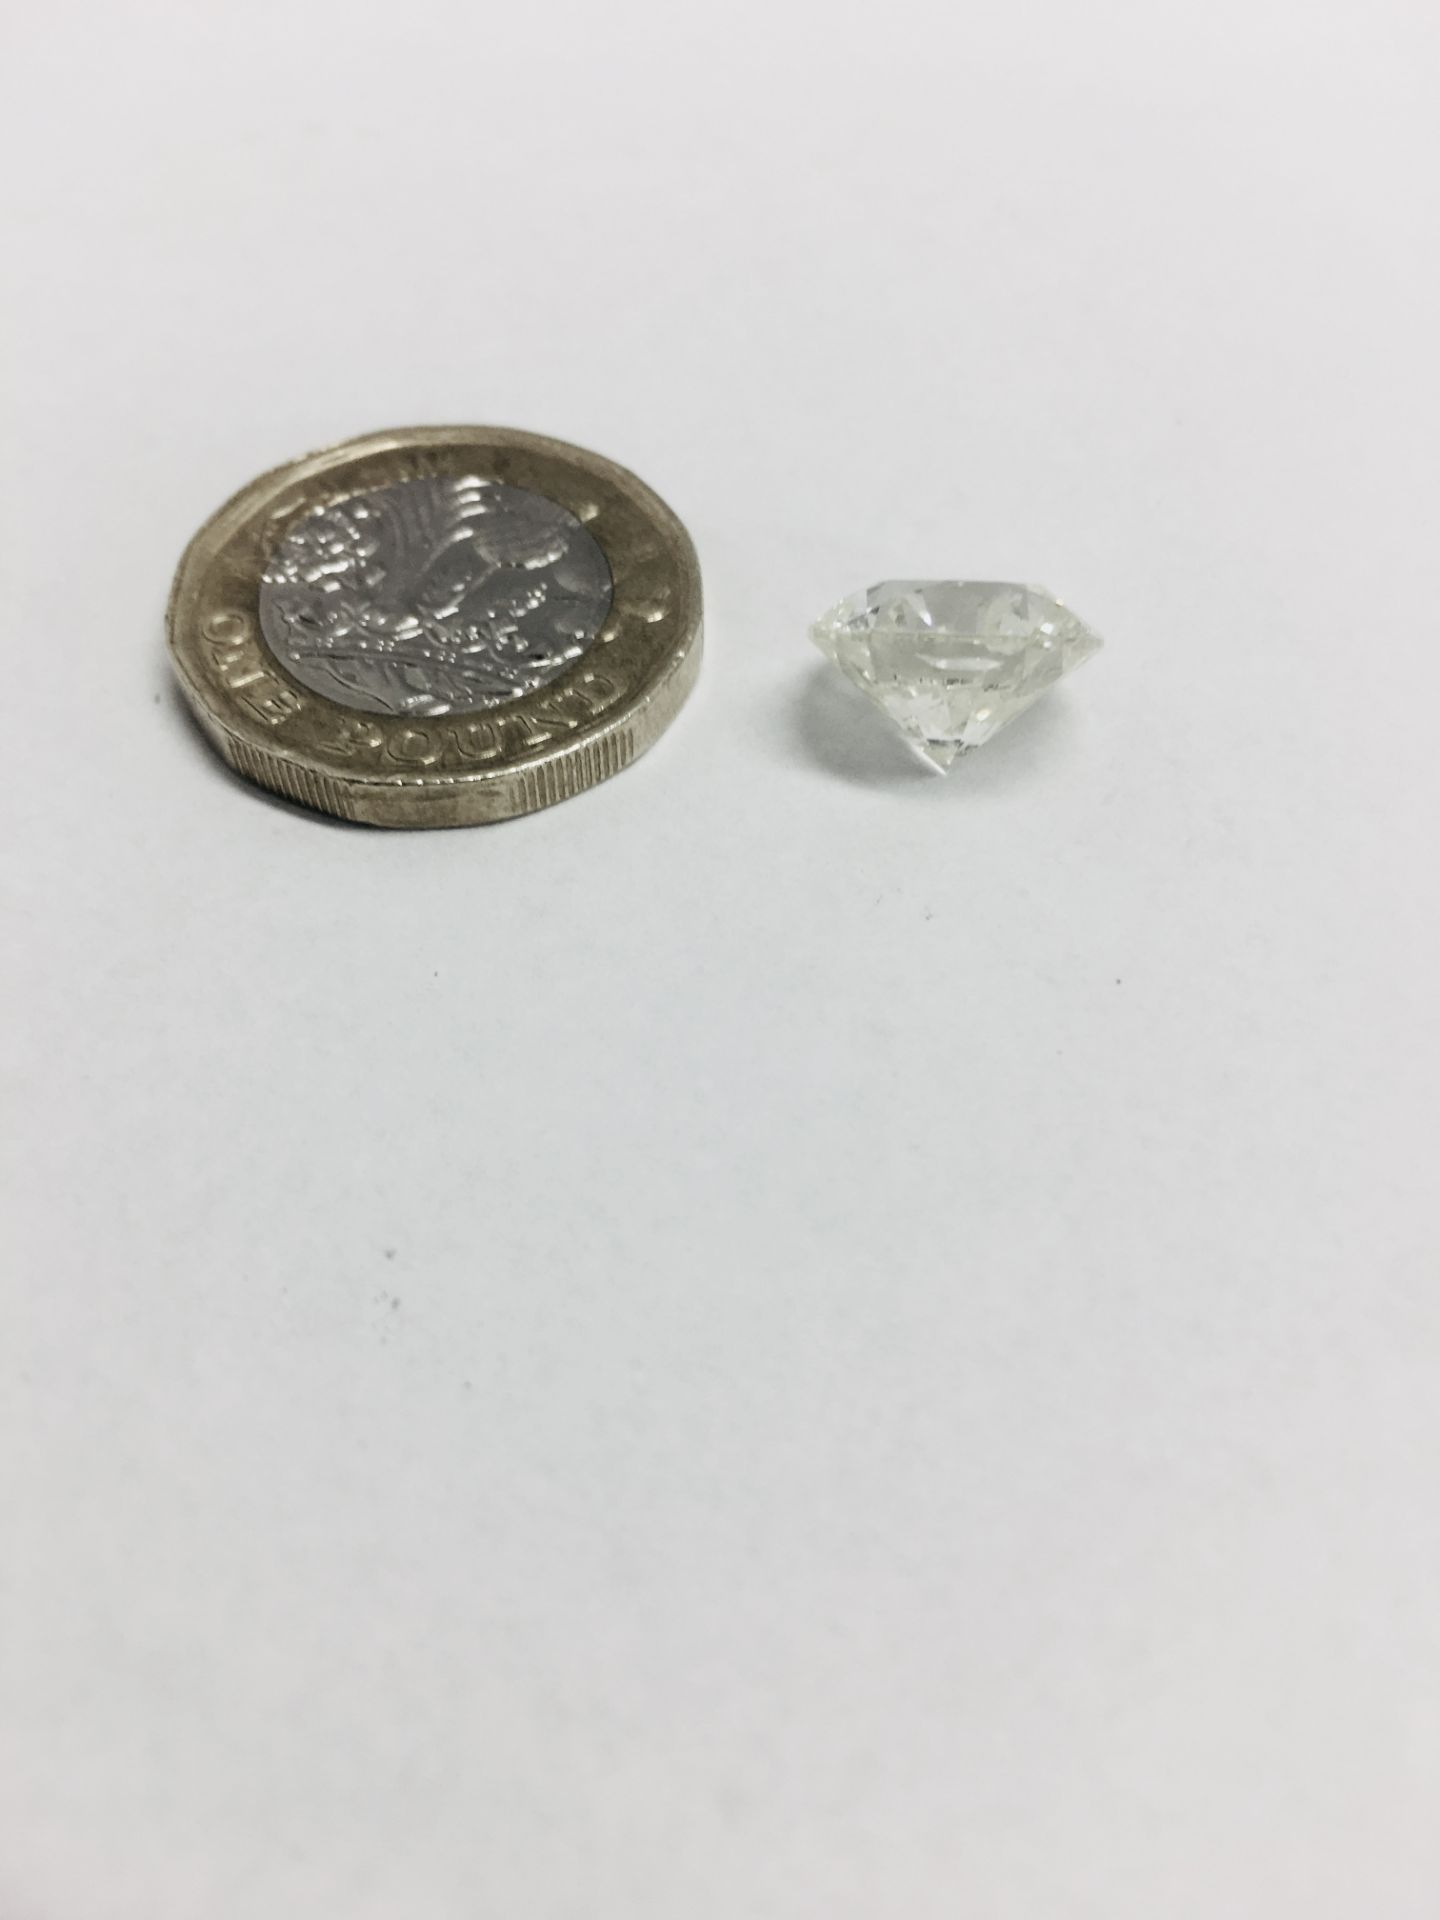 5.16ct Brilliant cut diamond ,g colour i1 clarity, Appraisal 50000 - Image 3 of 3